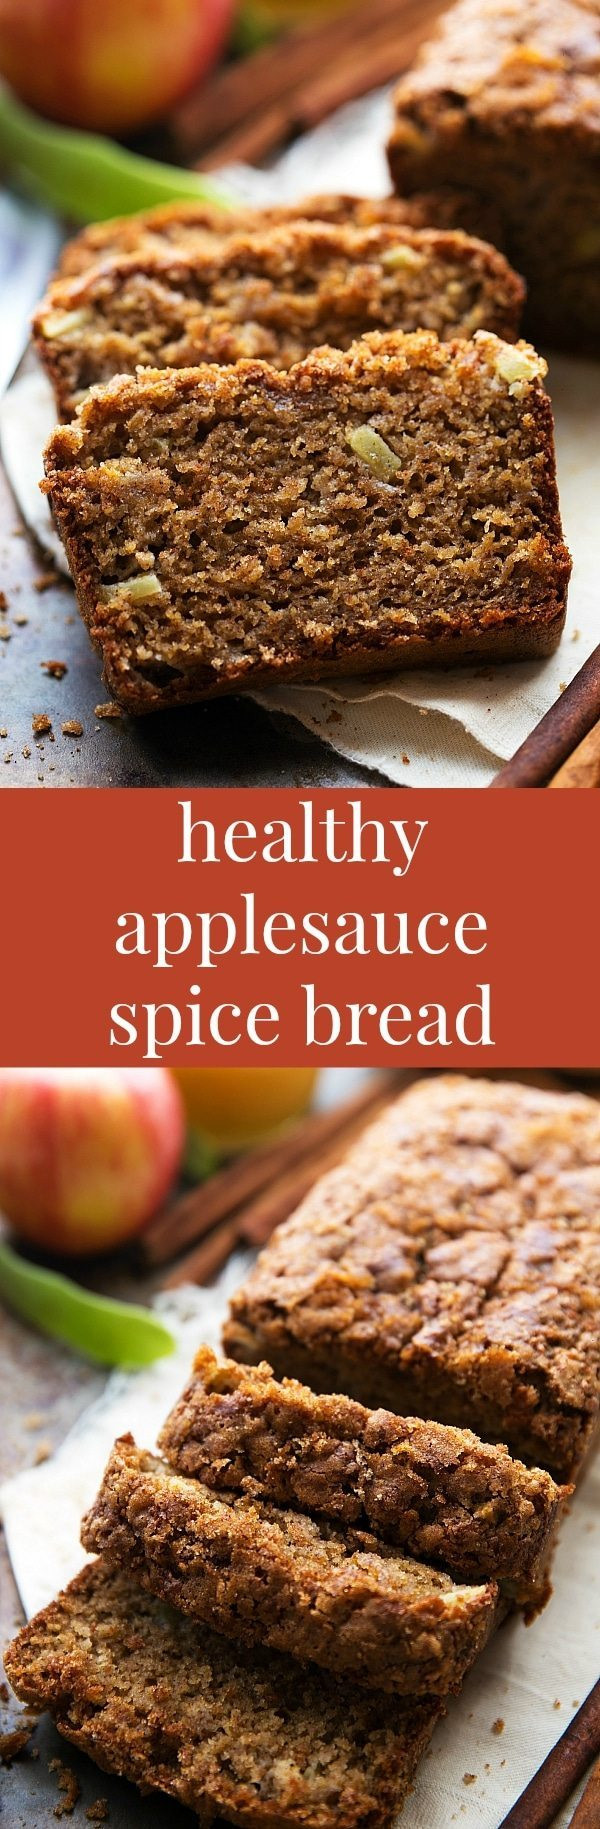 Healthy Recipes Using Applesauce
 healthy applesauce bread recipe